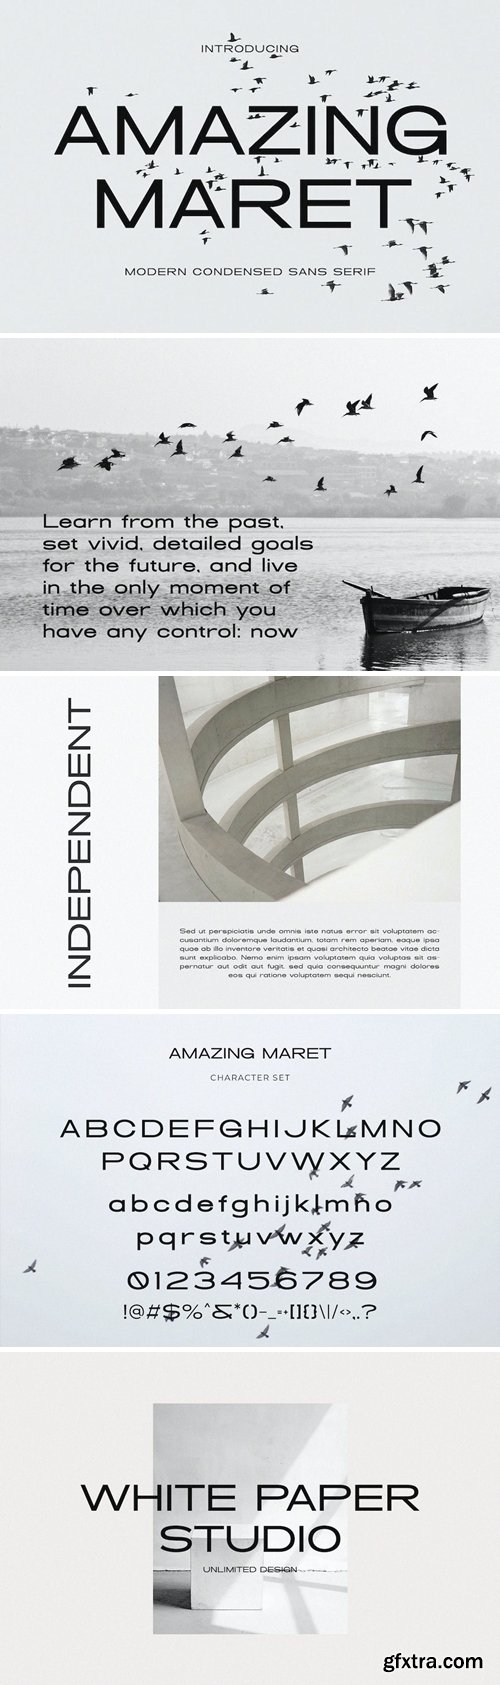 Amazing Maret - Modern Condensed Sans Serif Font